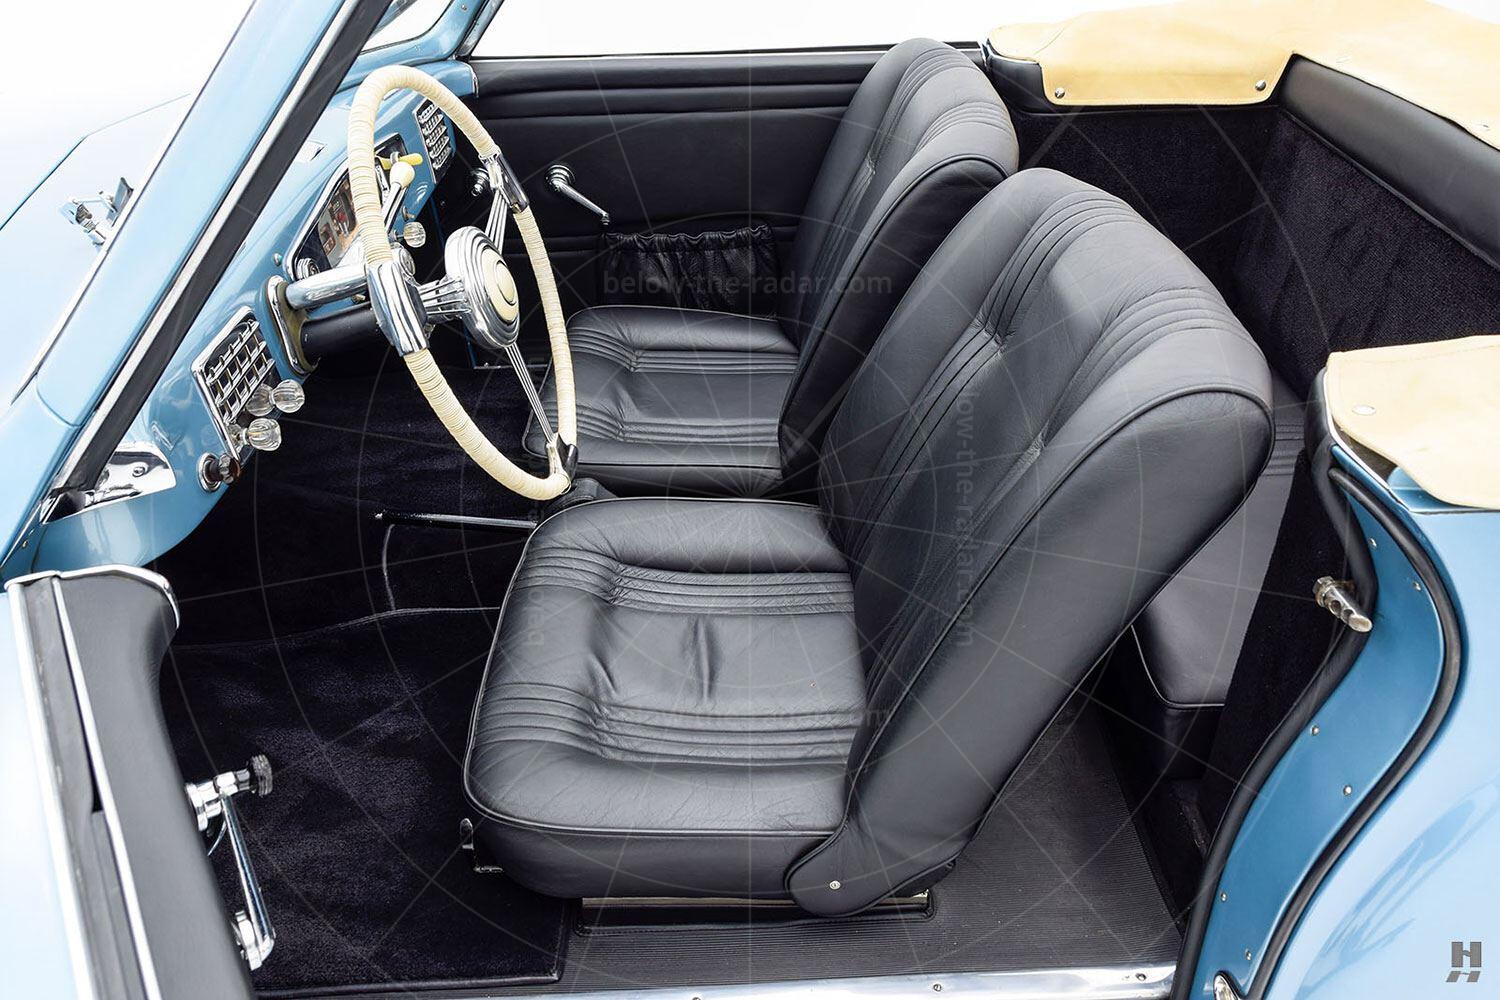 Fiat 1100 cabriolet by Pinin Farina - interior Pic: Hyman Ltd | Fiat 1100 cabriolet by Pinin Farina - interior